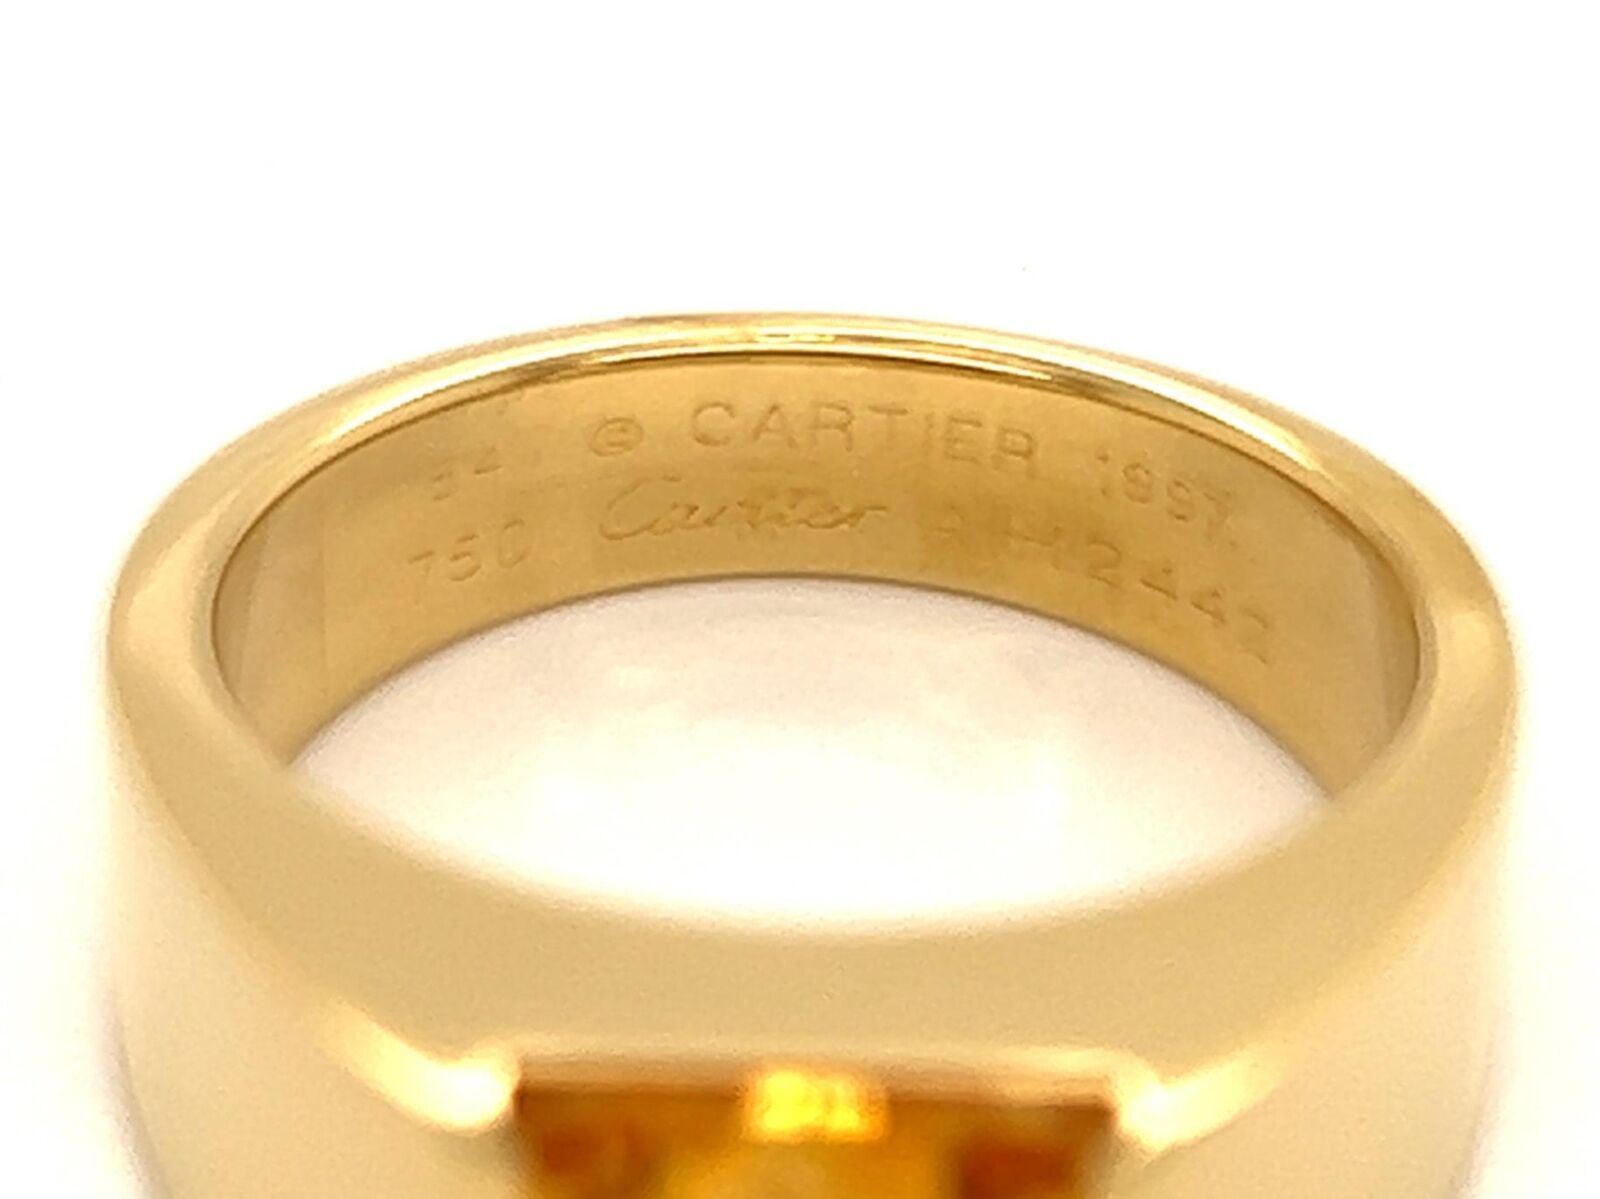 Cartier 18k Yellow Gold Large Tank Citrine Ring